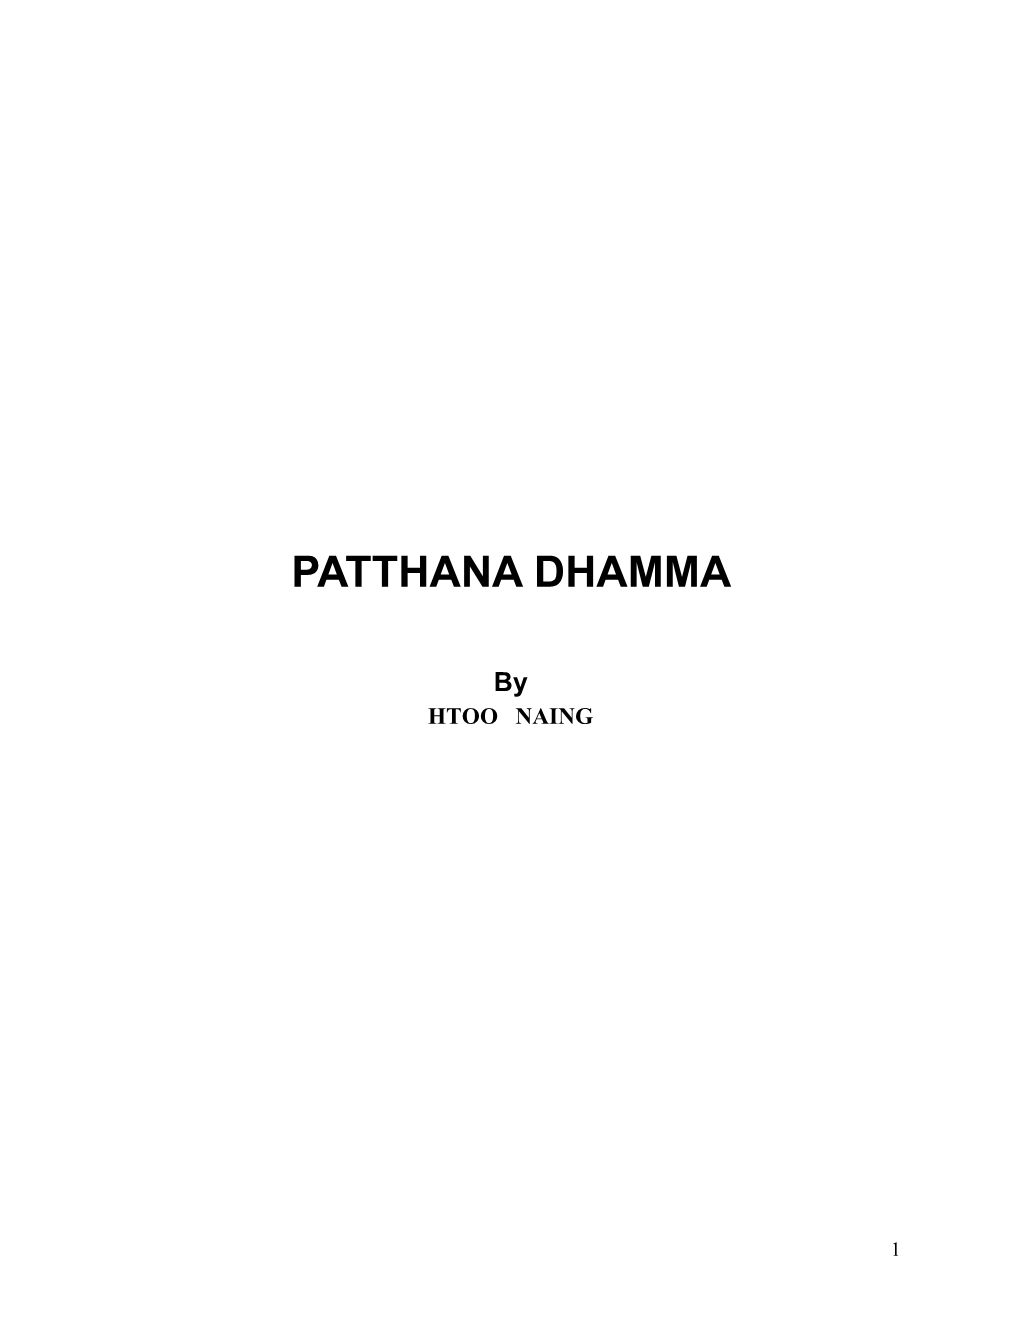 Notes on PATTHANA DHAMMA.Pdf